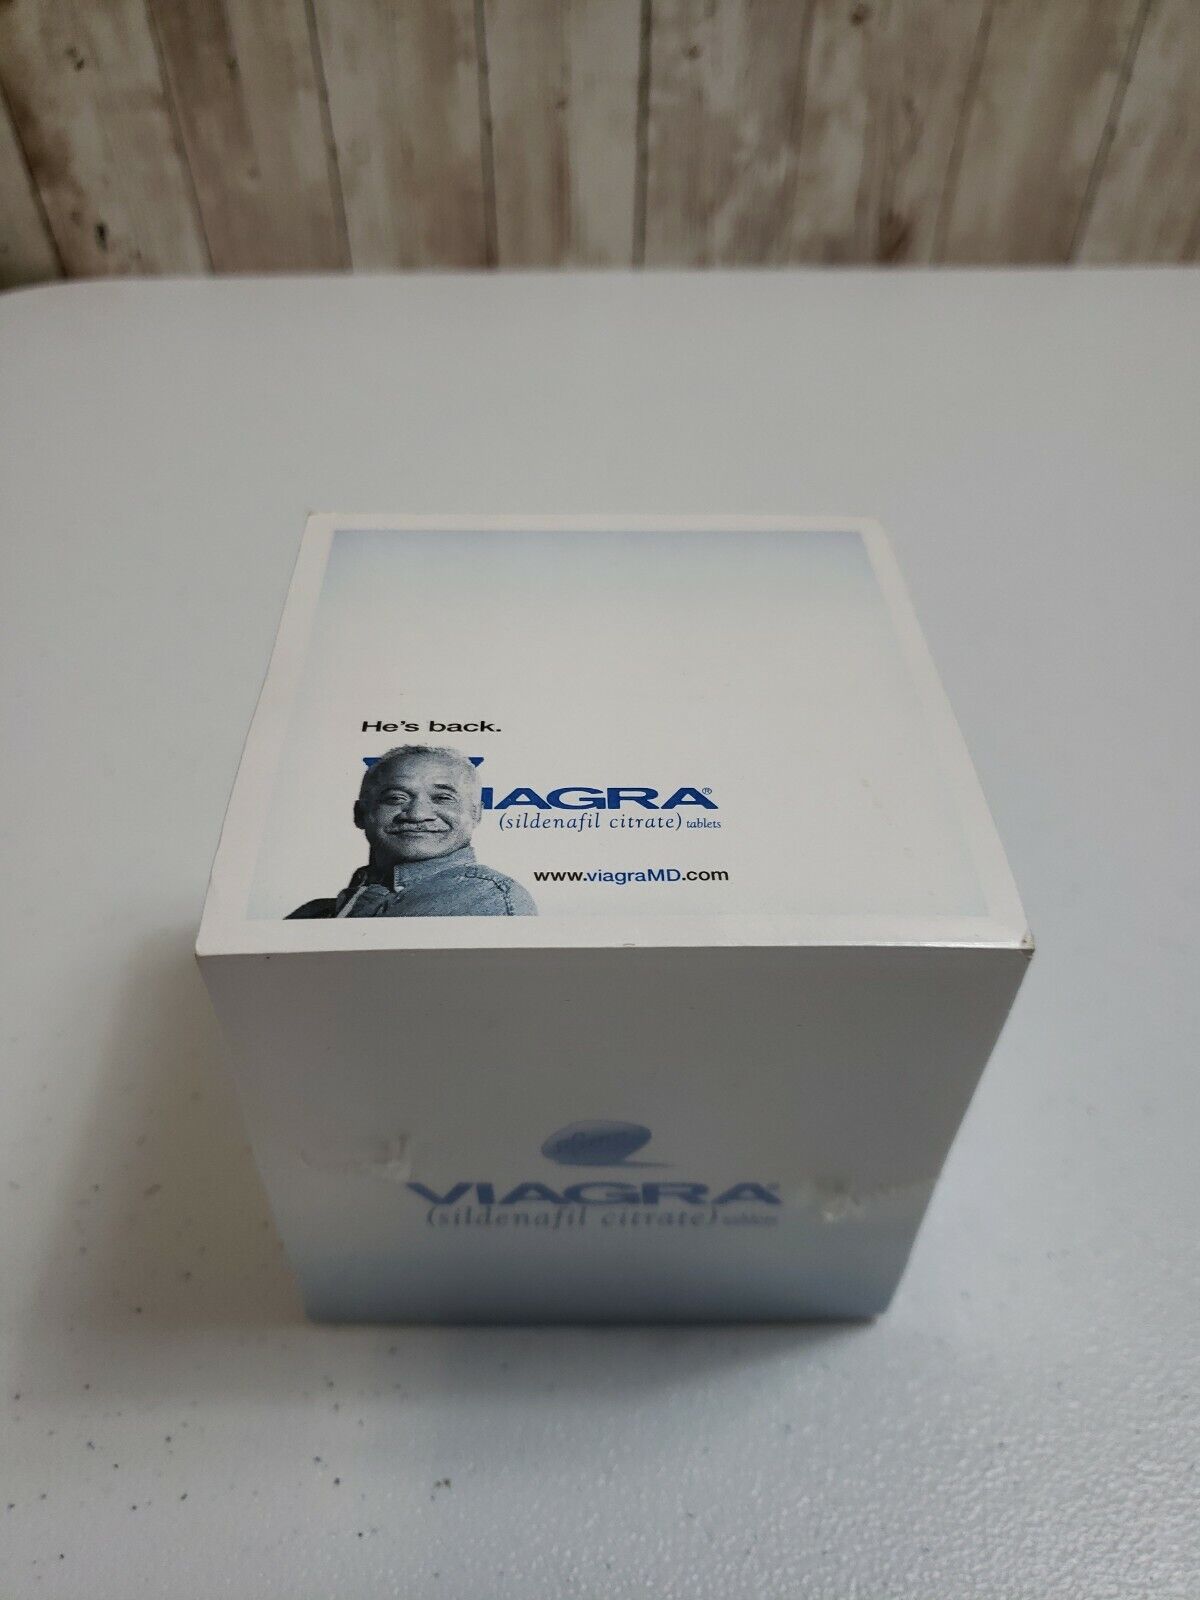 Viagra Advertising Desk Paper Cube 3 5 in x 3.5in 2004 Note packs paper refils